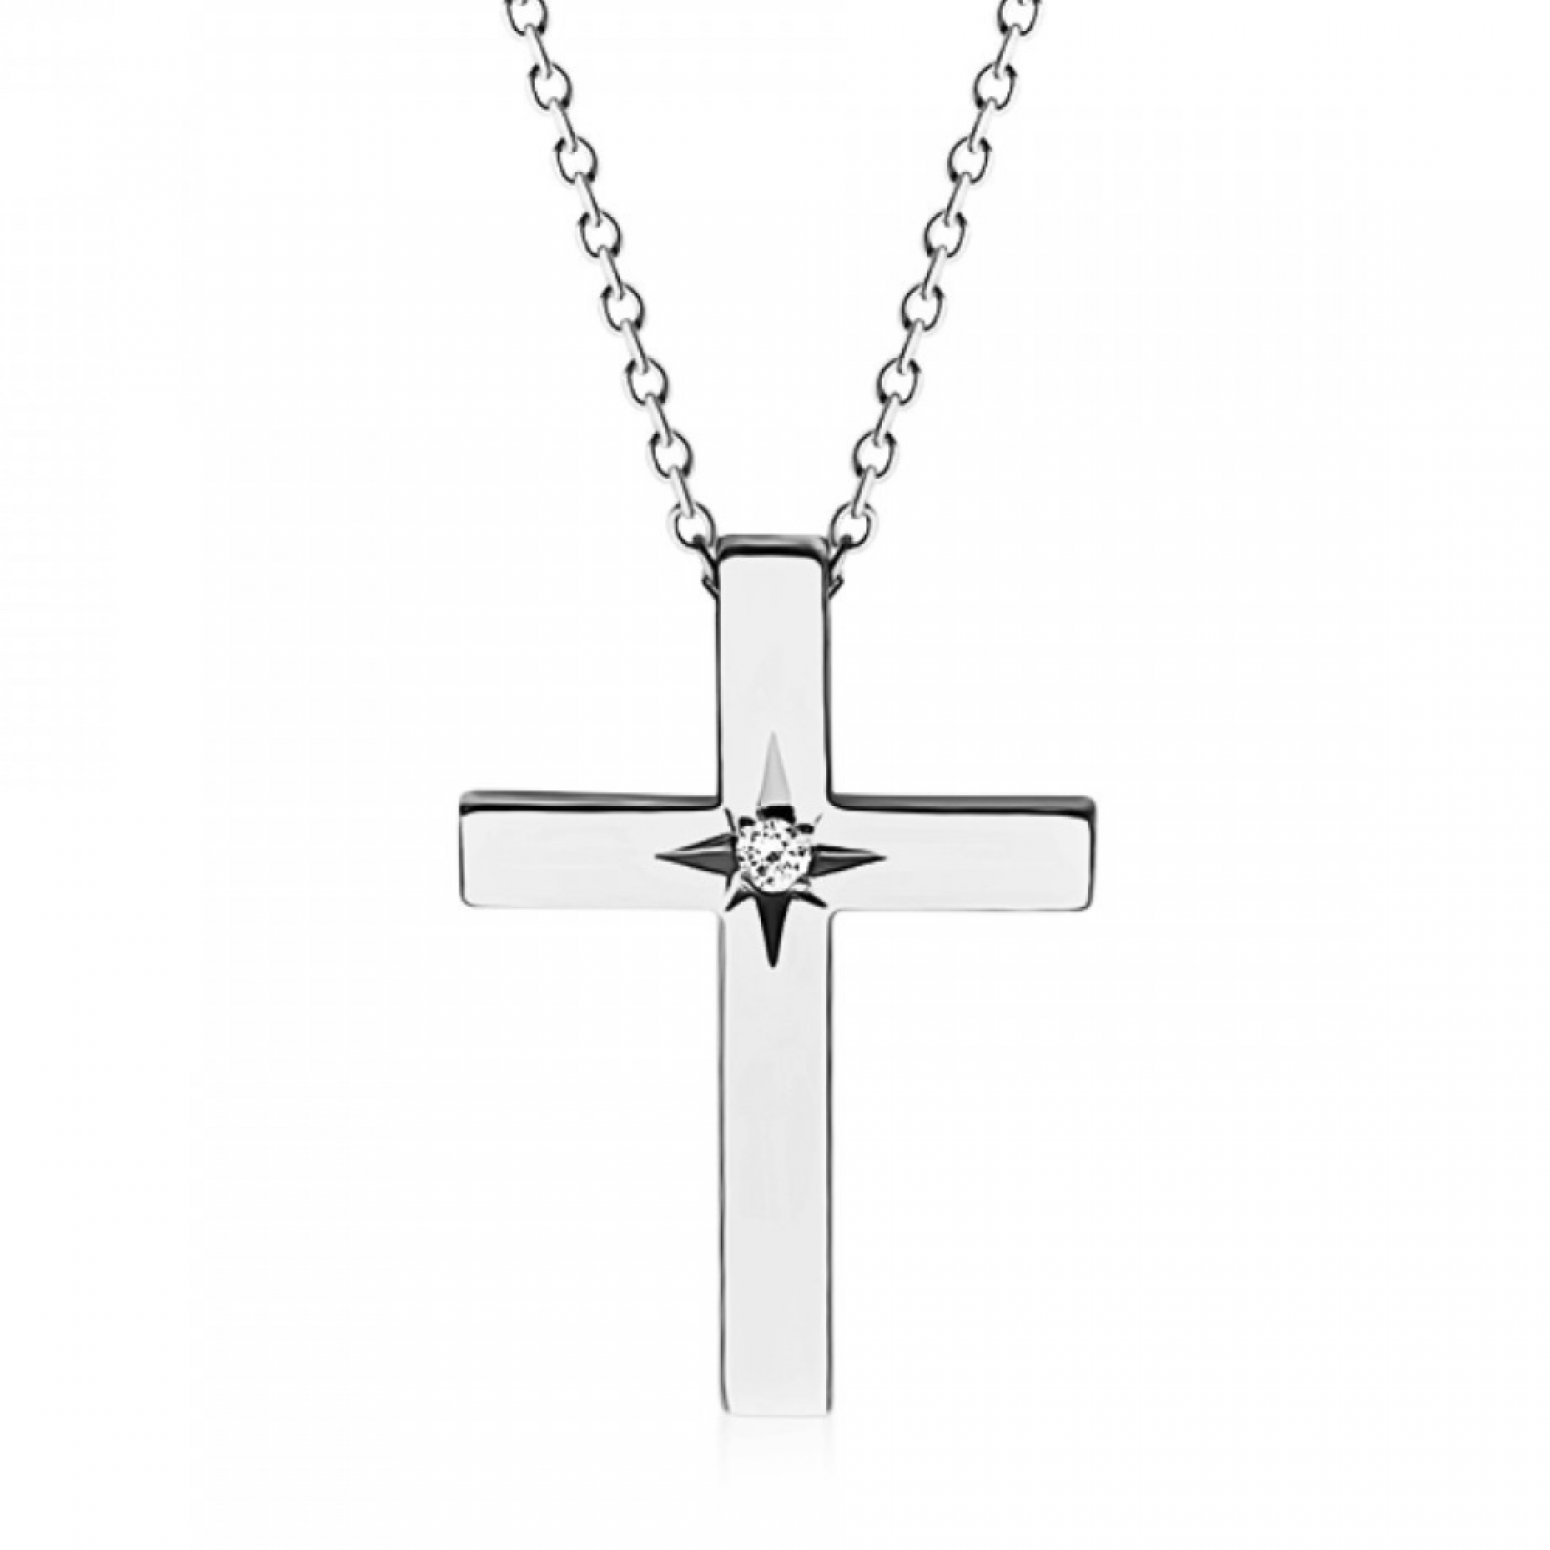 Baptism cross with chain K14 white gold with diamond 0.02ct, VS2, H ko5290 CROSSES Κοσμηματα - chrilia.gr